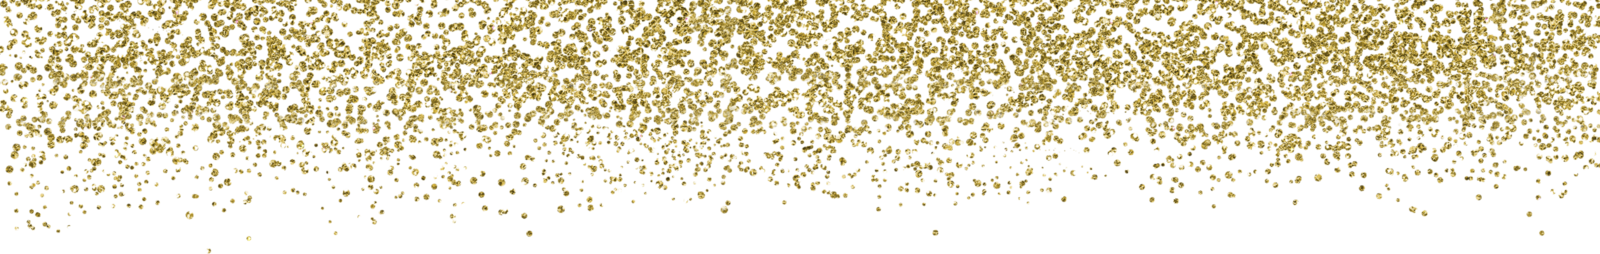 gold glitter, kayce stork photography photographers biloxi #25217